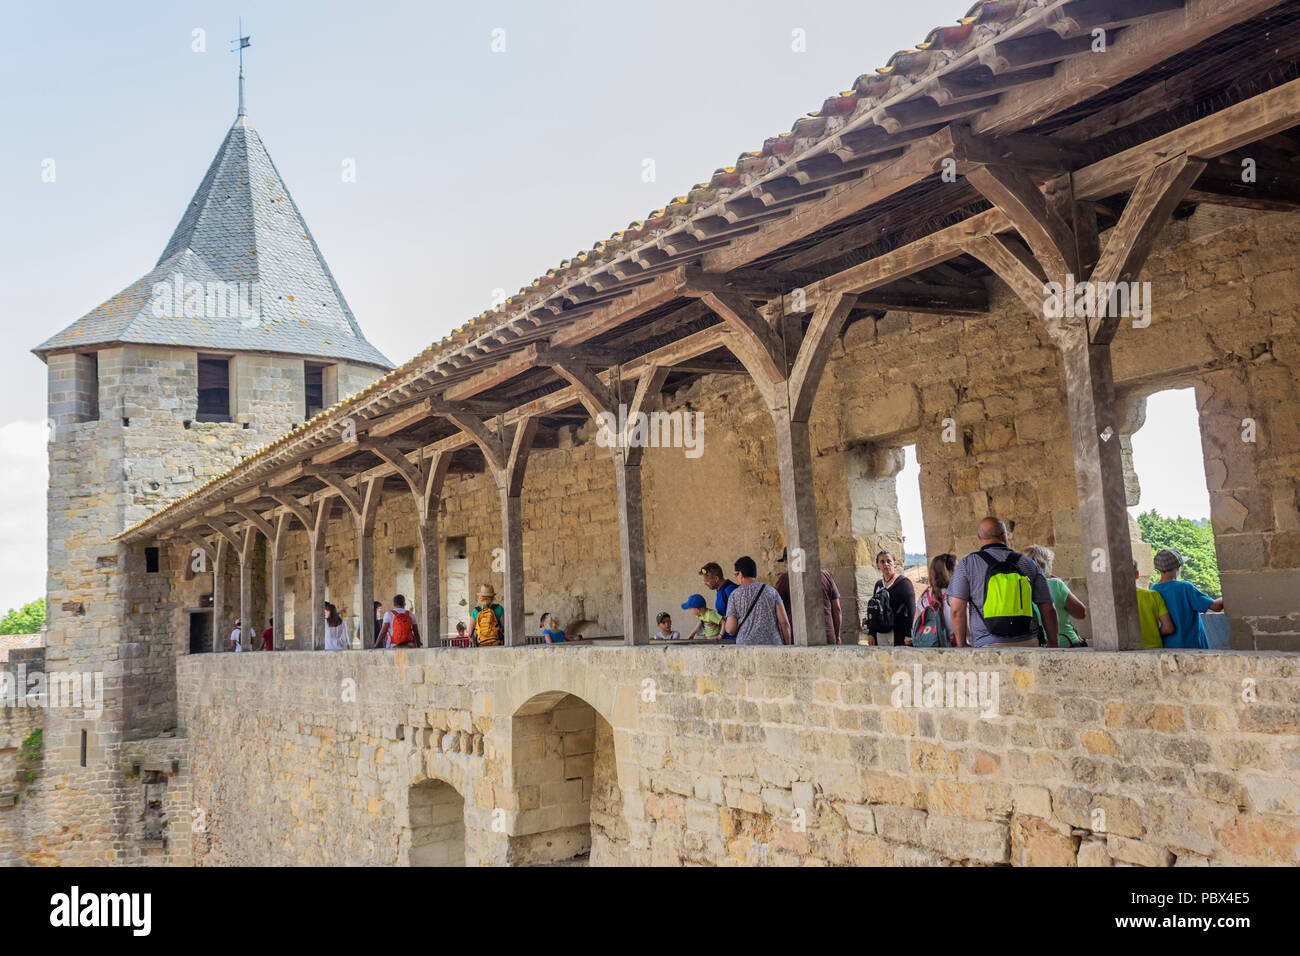 The medieval Cité of Carcassonne, French department of Aude, Occitanie Region, France. Tour des Casernes in the Chateau Comtal. Stock Photo